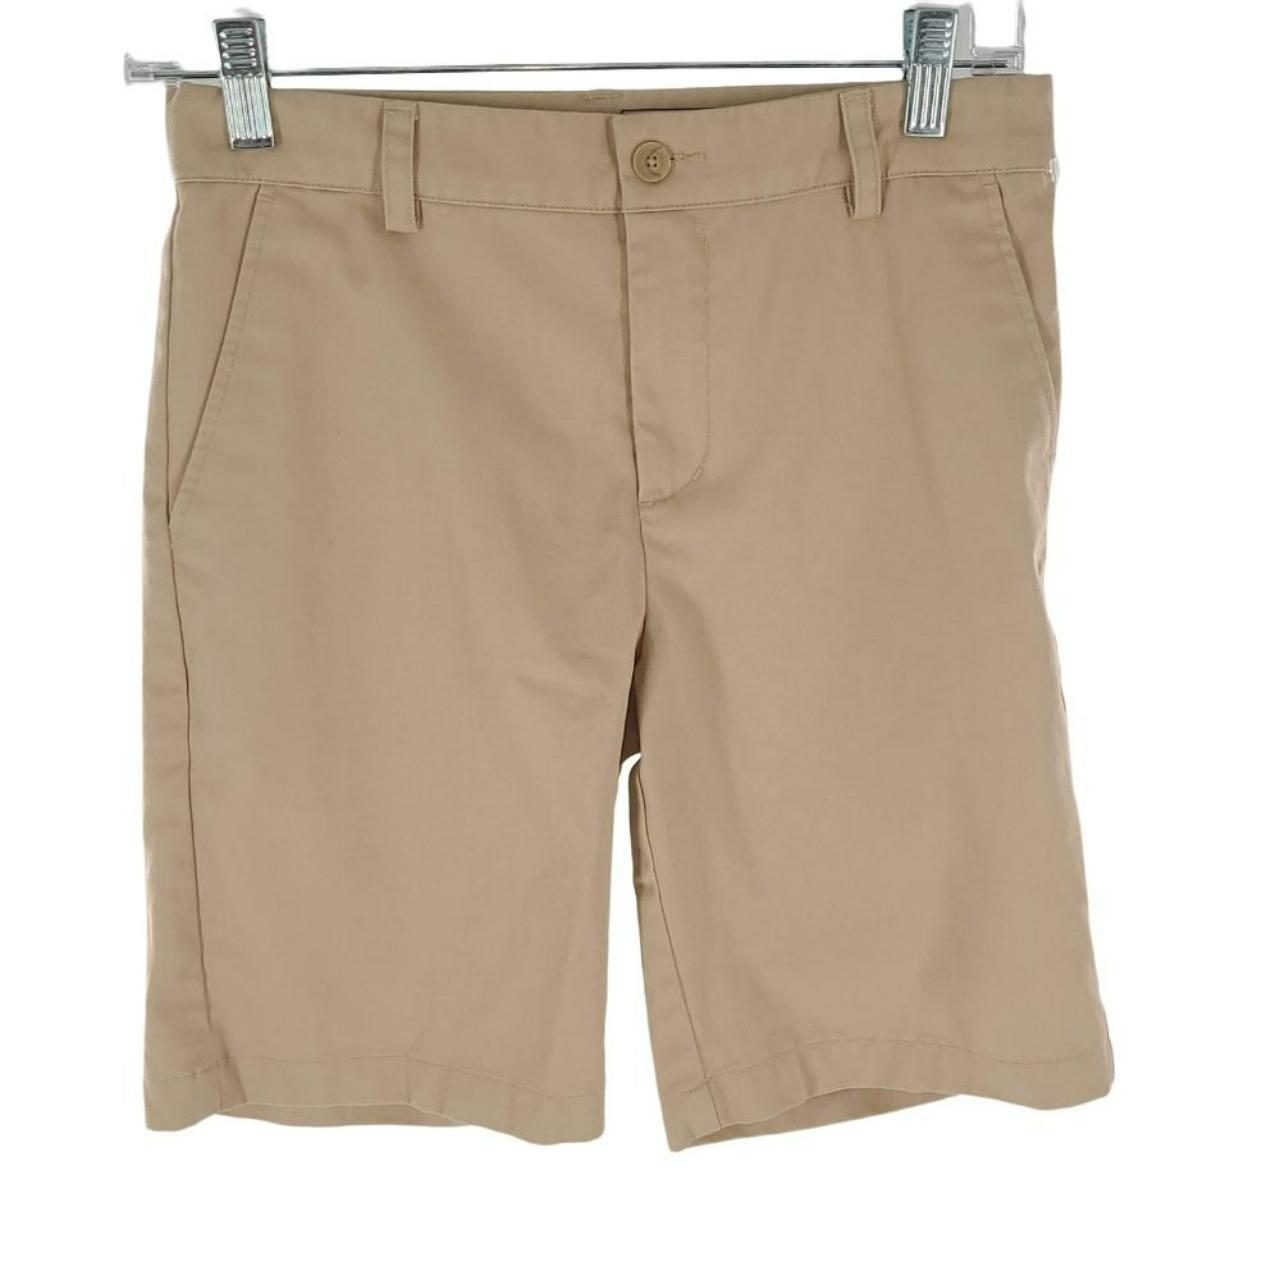 Product Image 1 - Slazenger Women's Uniforms Bermuda Shorts